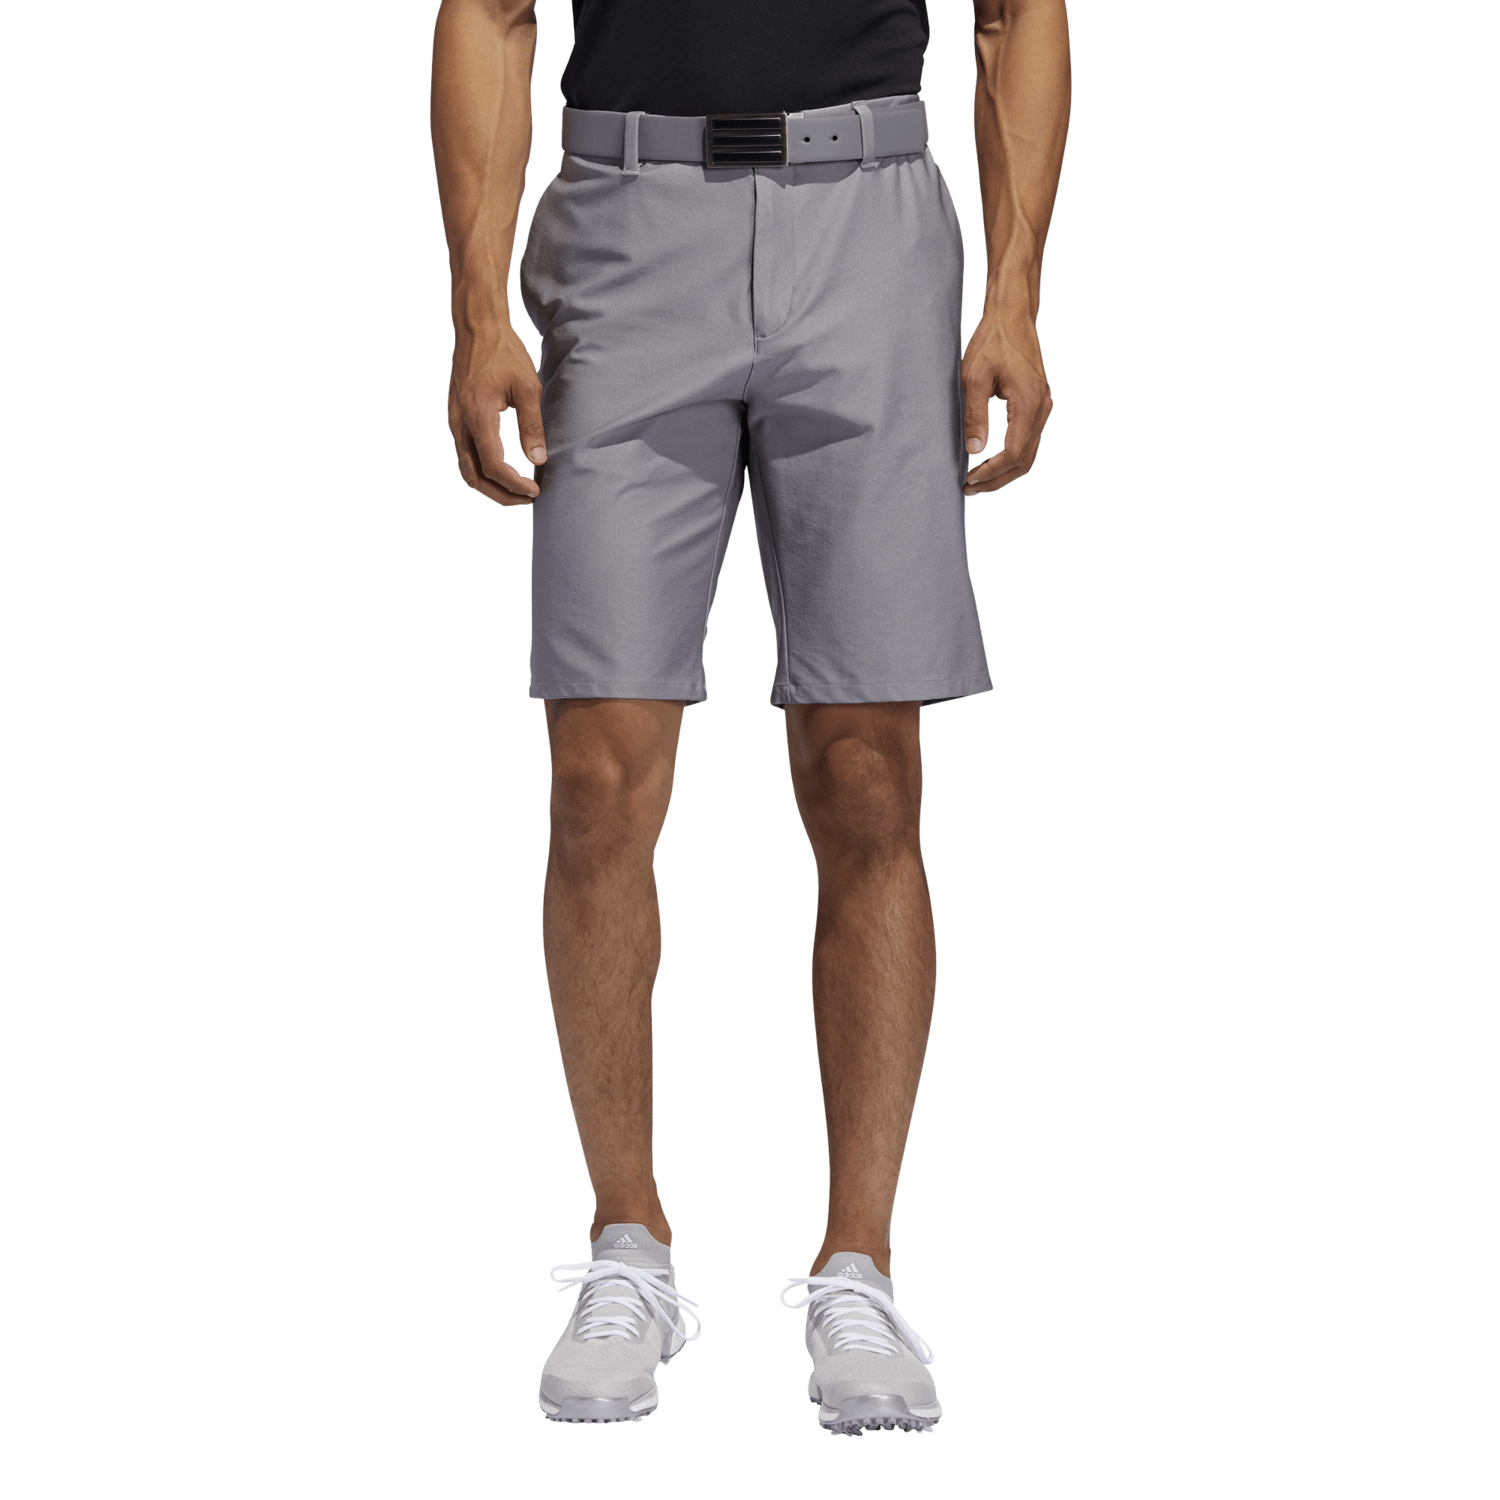 men's adidas 3 stripe golf shorts